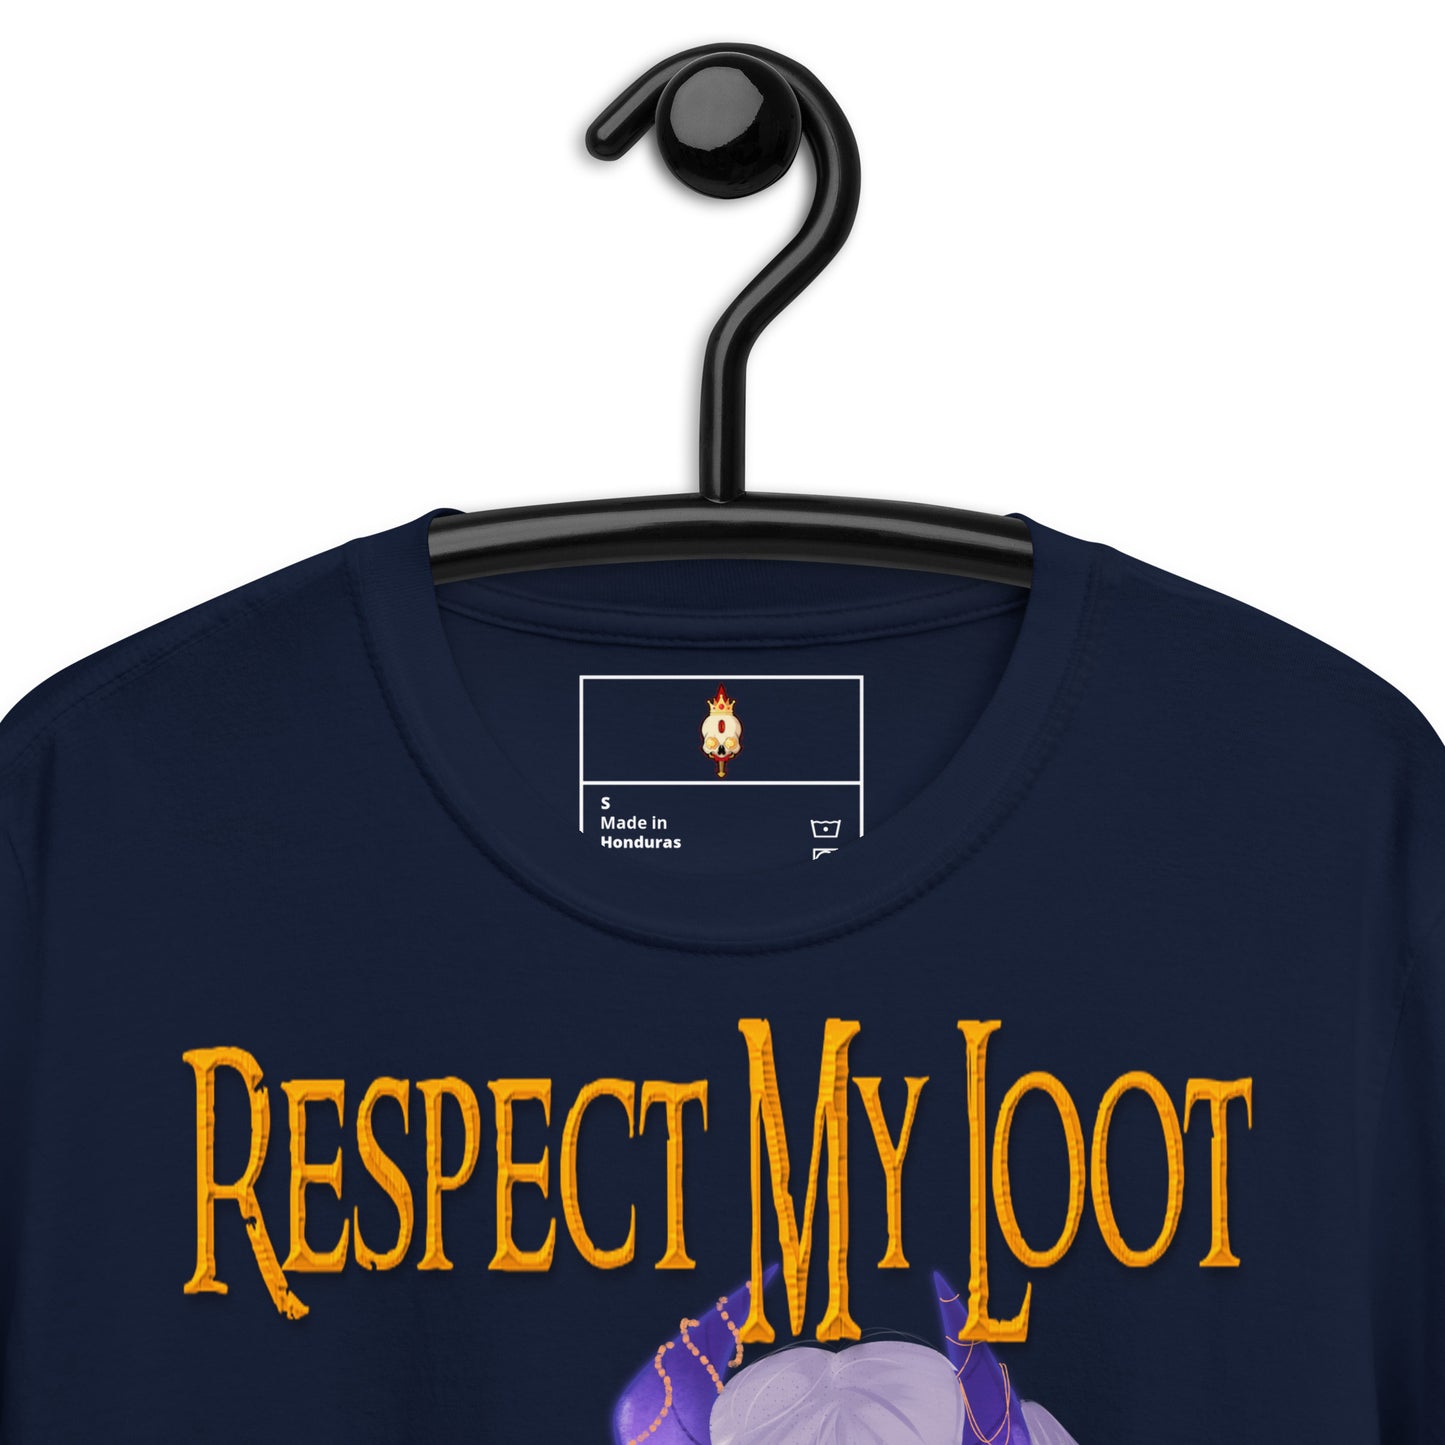 Respect My Loot - Short-Sleeve Unisex T-Shirt